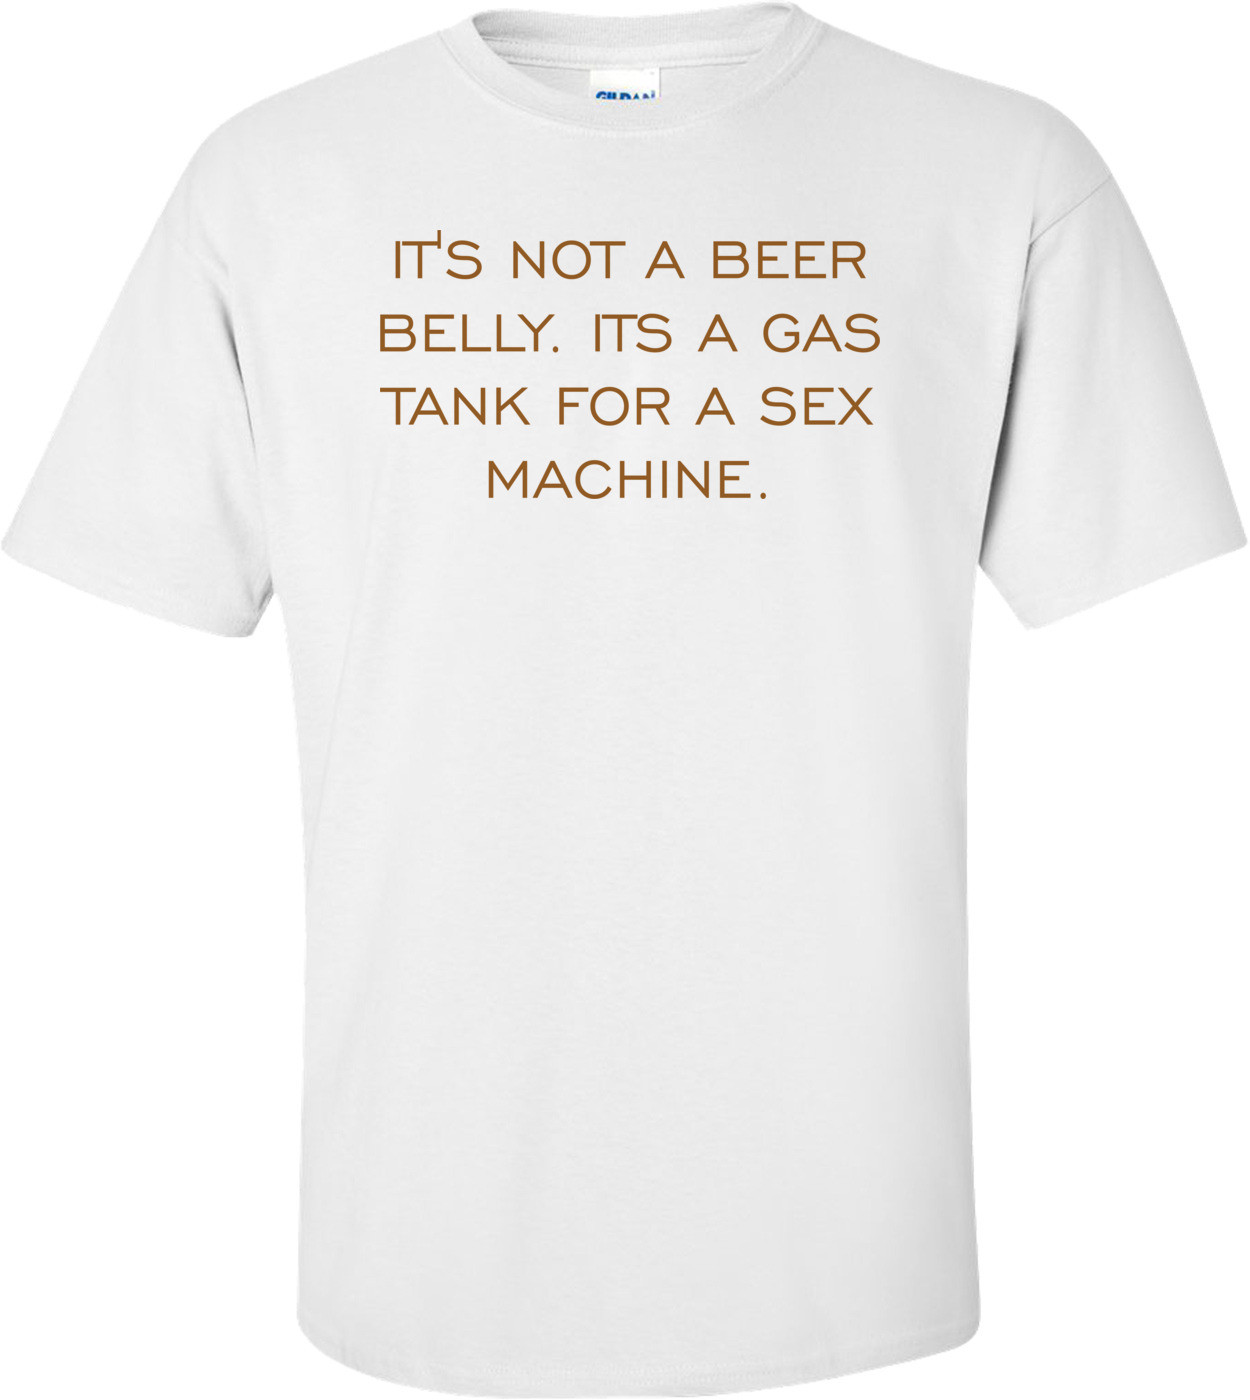 IT'S NOT A BEER BELLY. ITS A GAS TANK FOR A SEX MACHINE. Shirt